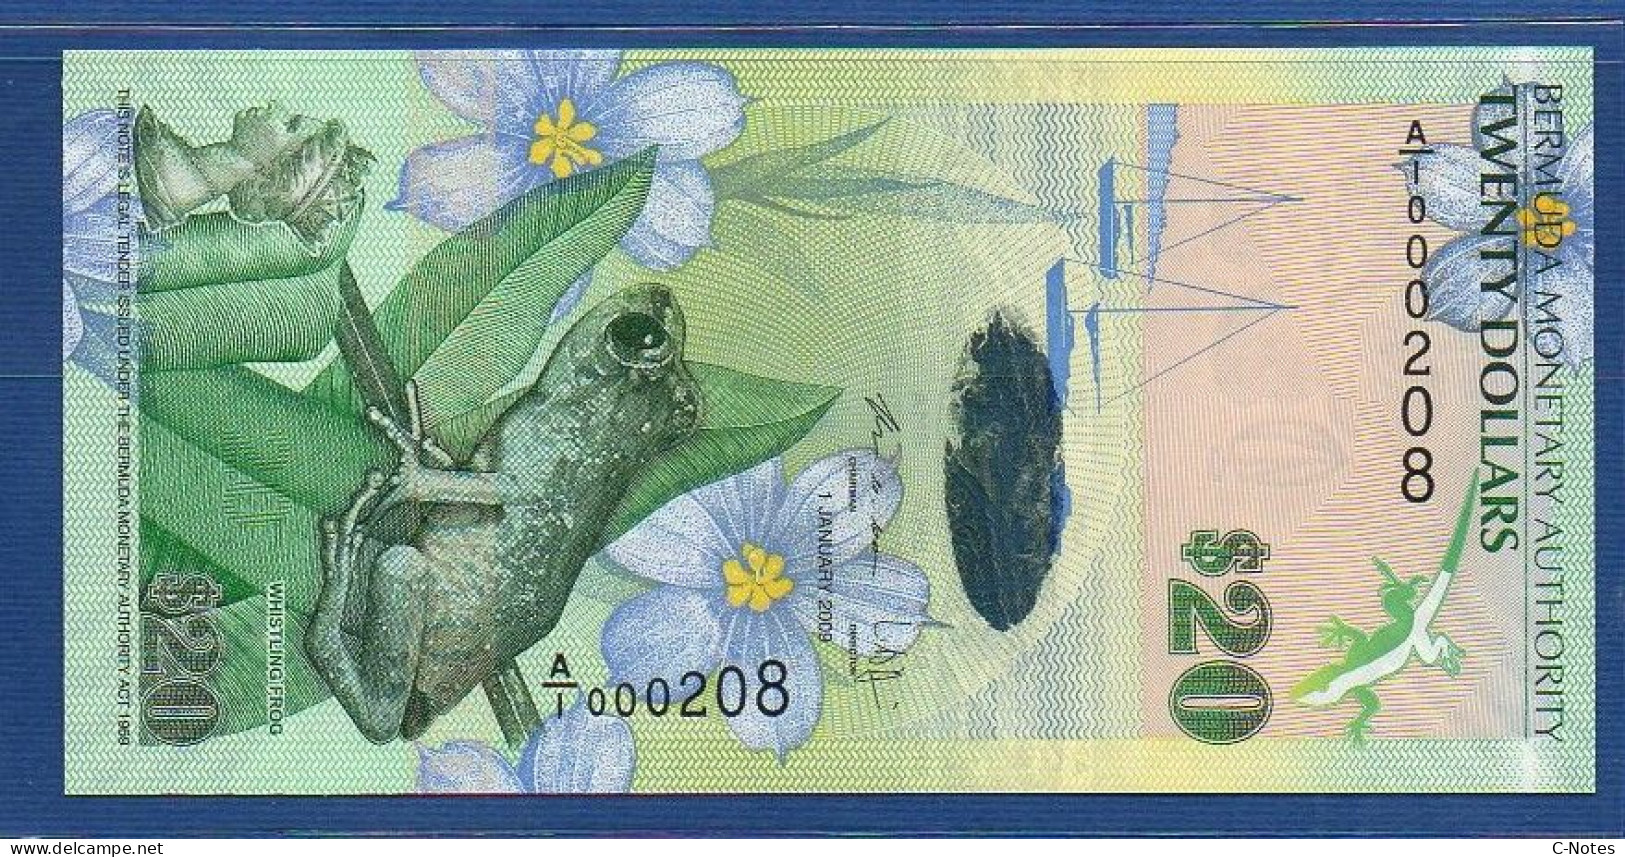 BERMUDA - P.60b1 – 20 Dollars 2009 UNC, S/n A/1 000208 LOW NUMBER - Bermude